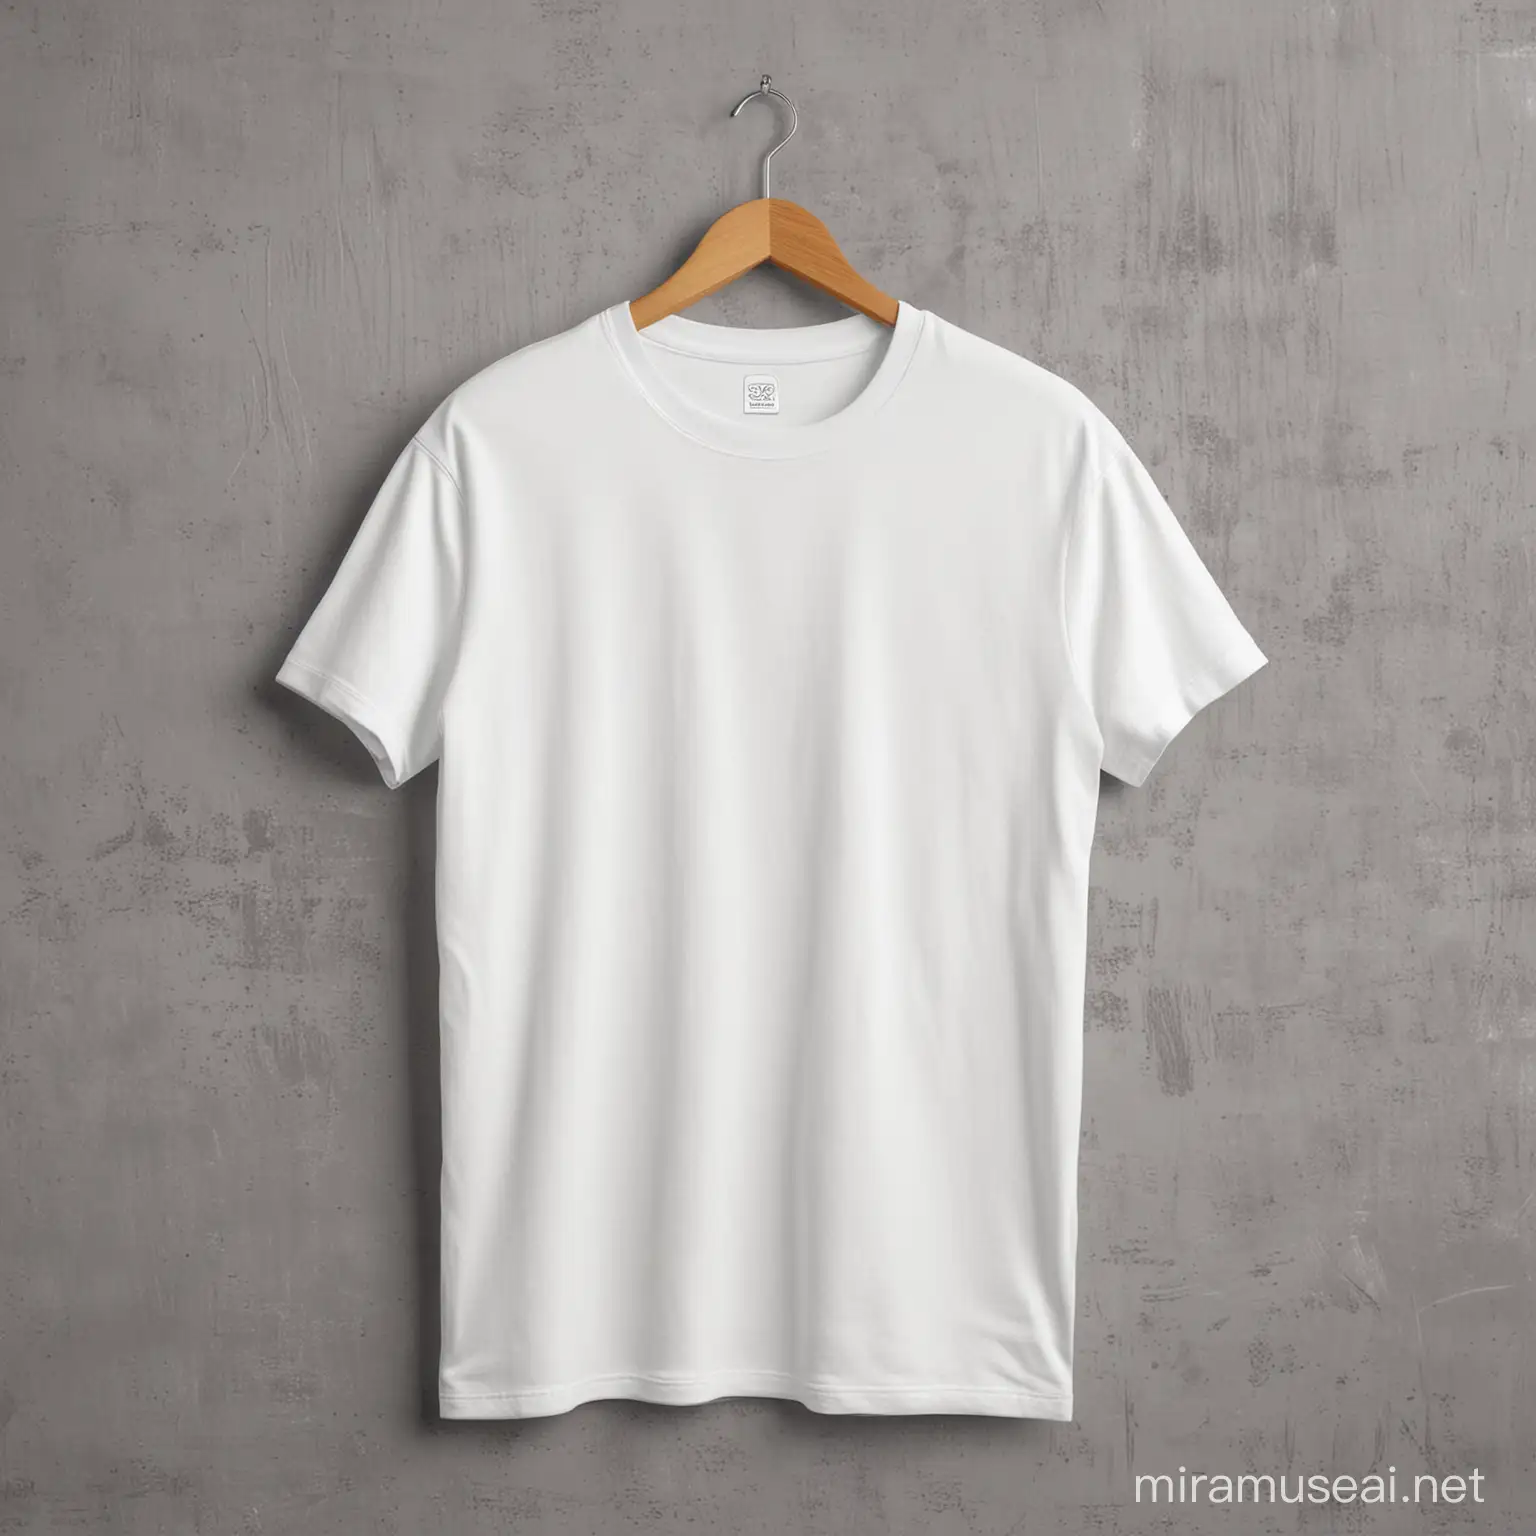 Stylish Gildan 64000 White TShirt Mockup for Fashion Forward Look